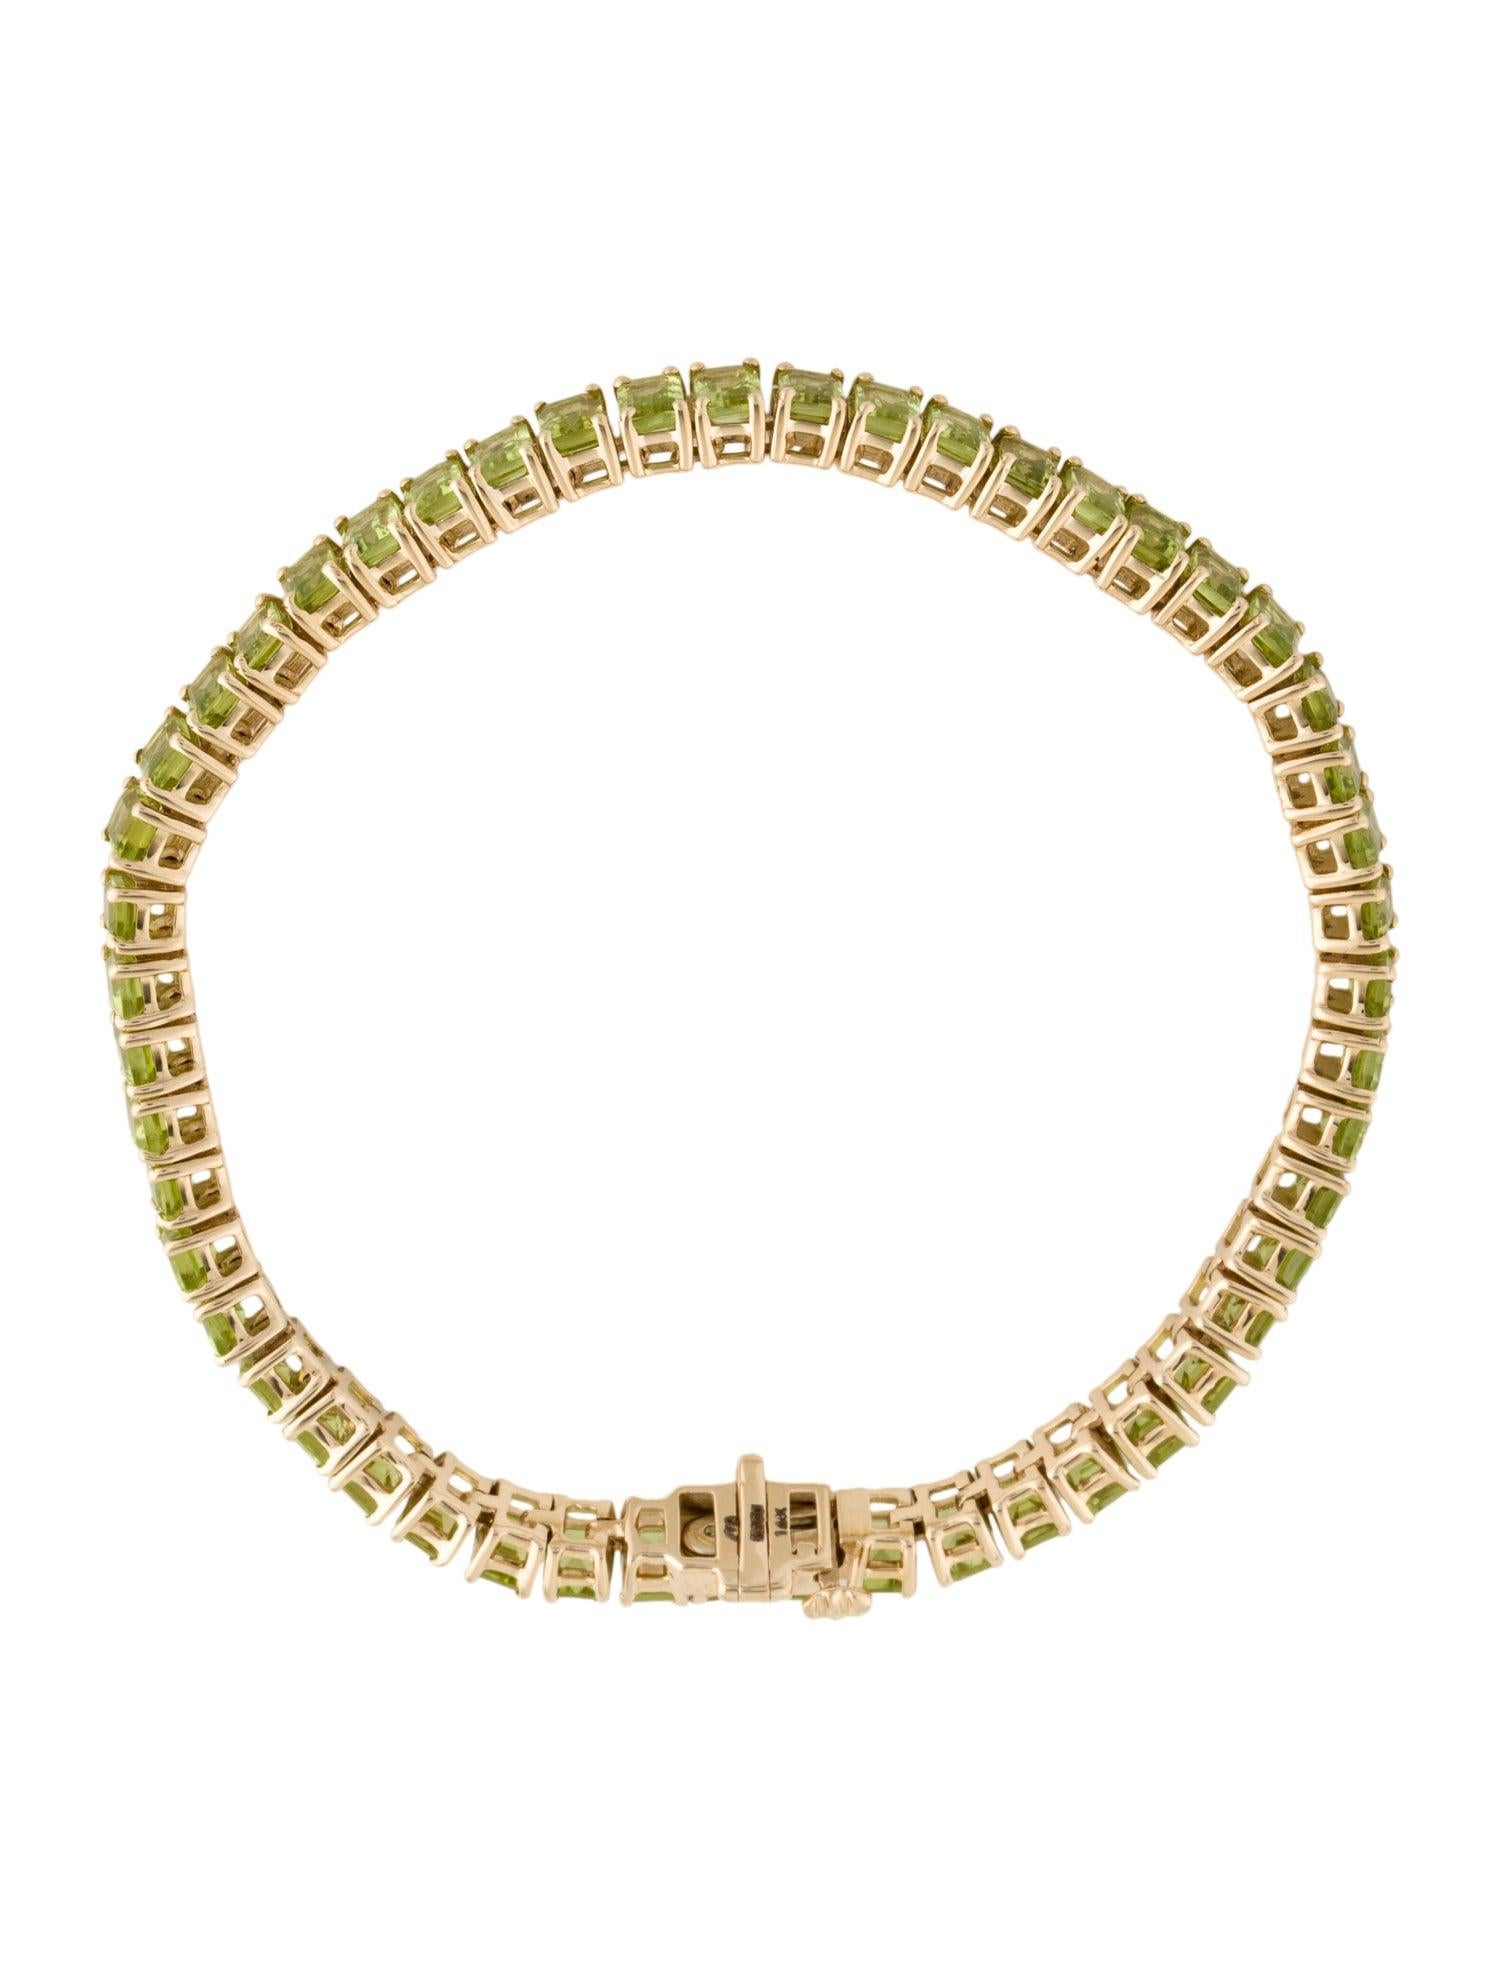 Taille brillant 14K 12.78ctw Peridot Link Bracelet - Vibrant Gemstone Elegance, Timeless Luxury en vente